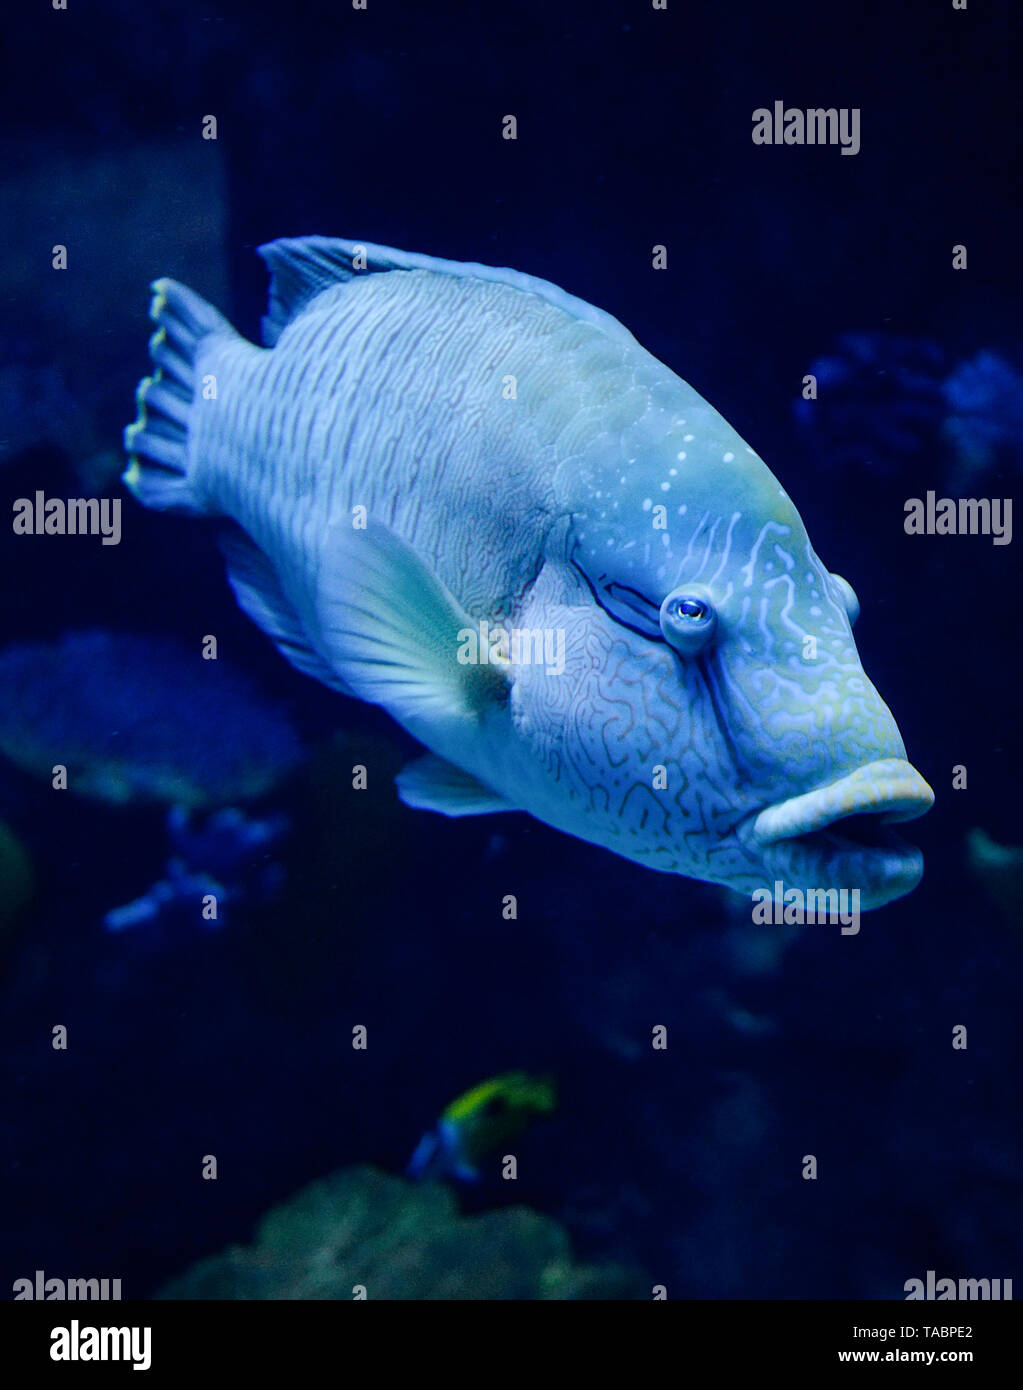 Humphead maori wrasse / pesce napoleone pesce nuotare vita marina oceano subacquea (Cheilinus undulatus) Foto Stock